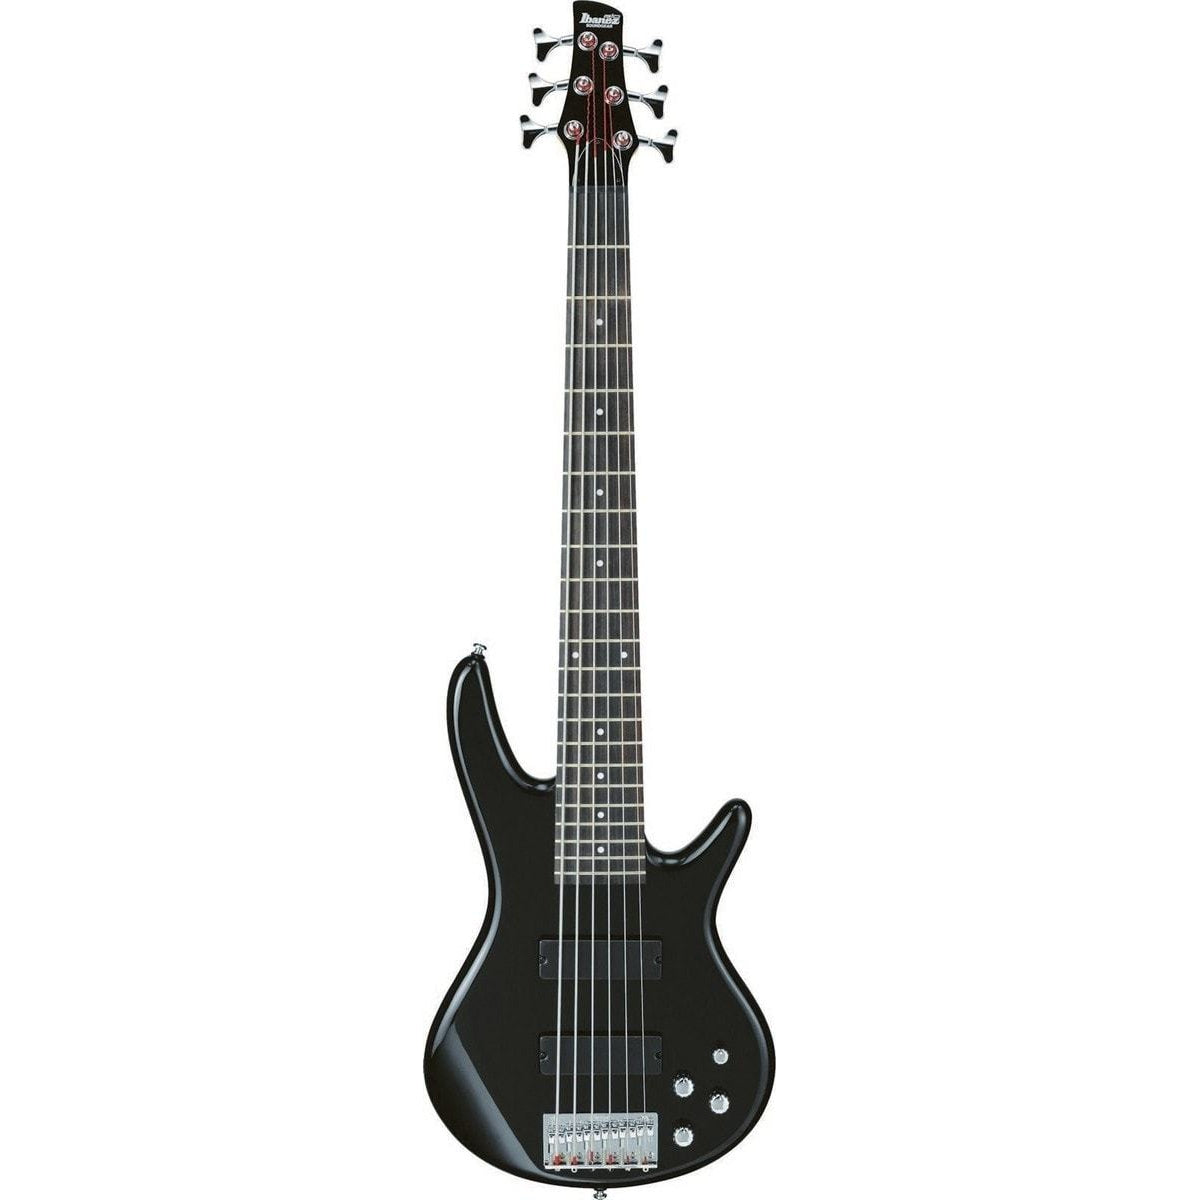 Ibanez GSR206 Gio Series 6-String Bass Guitar